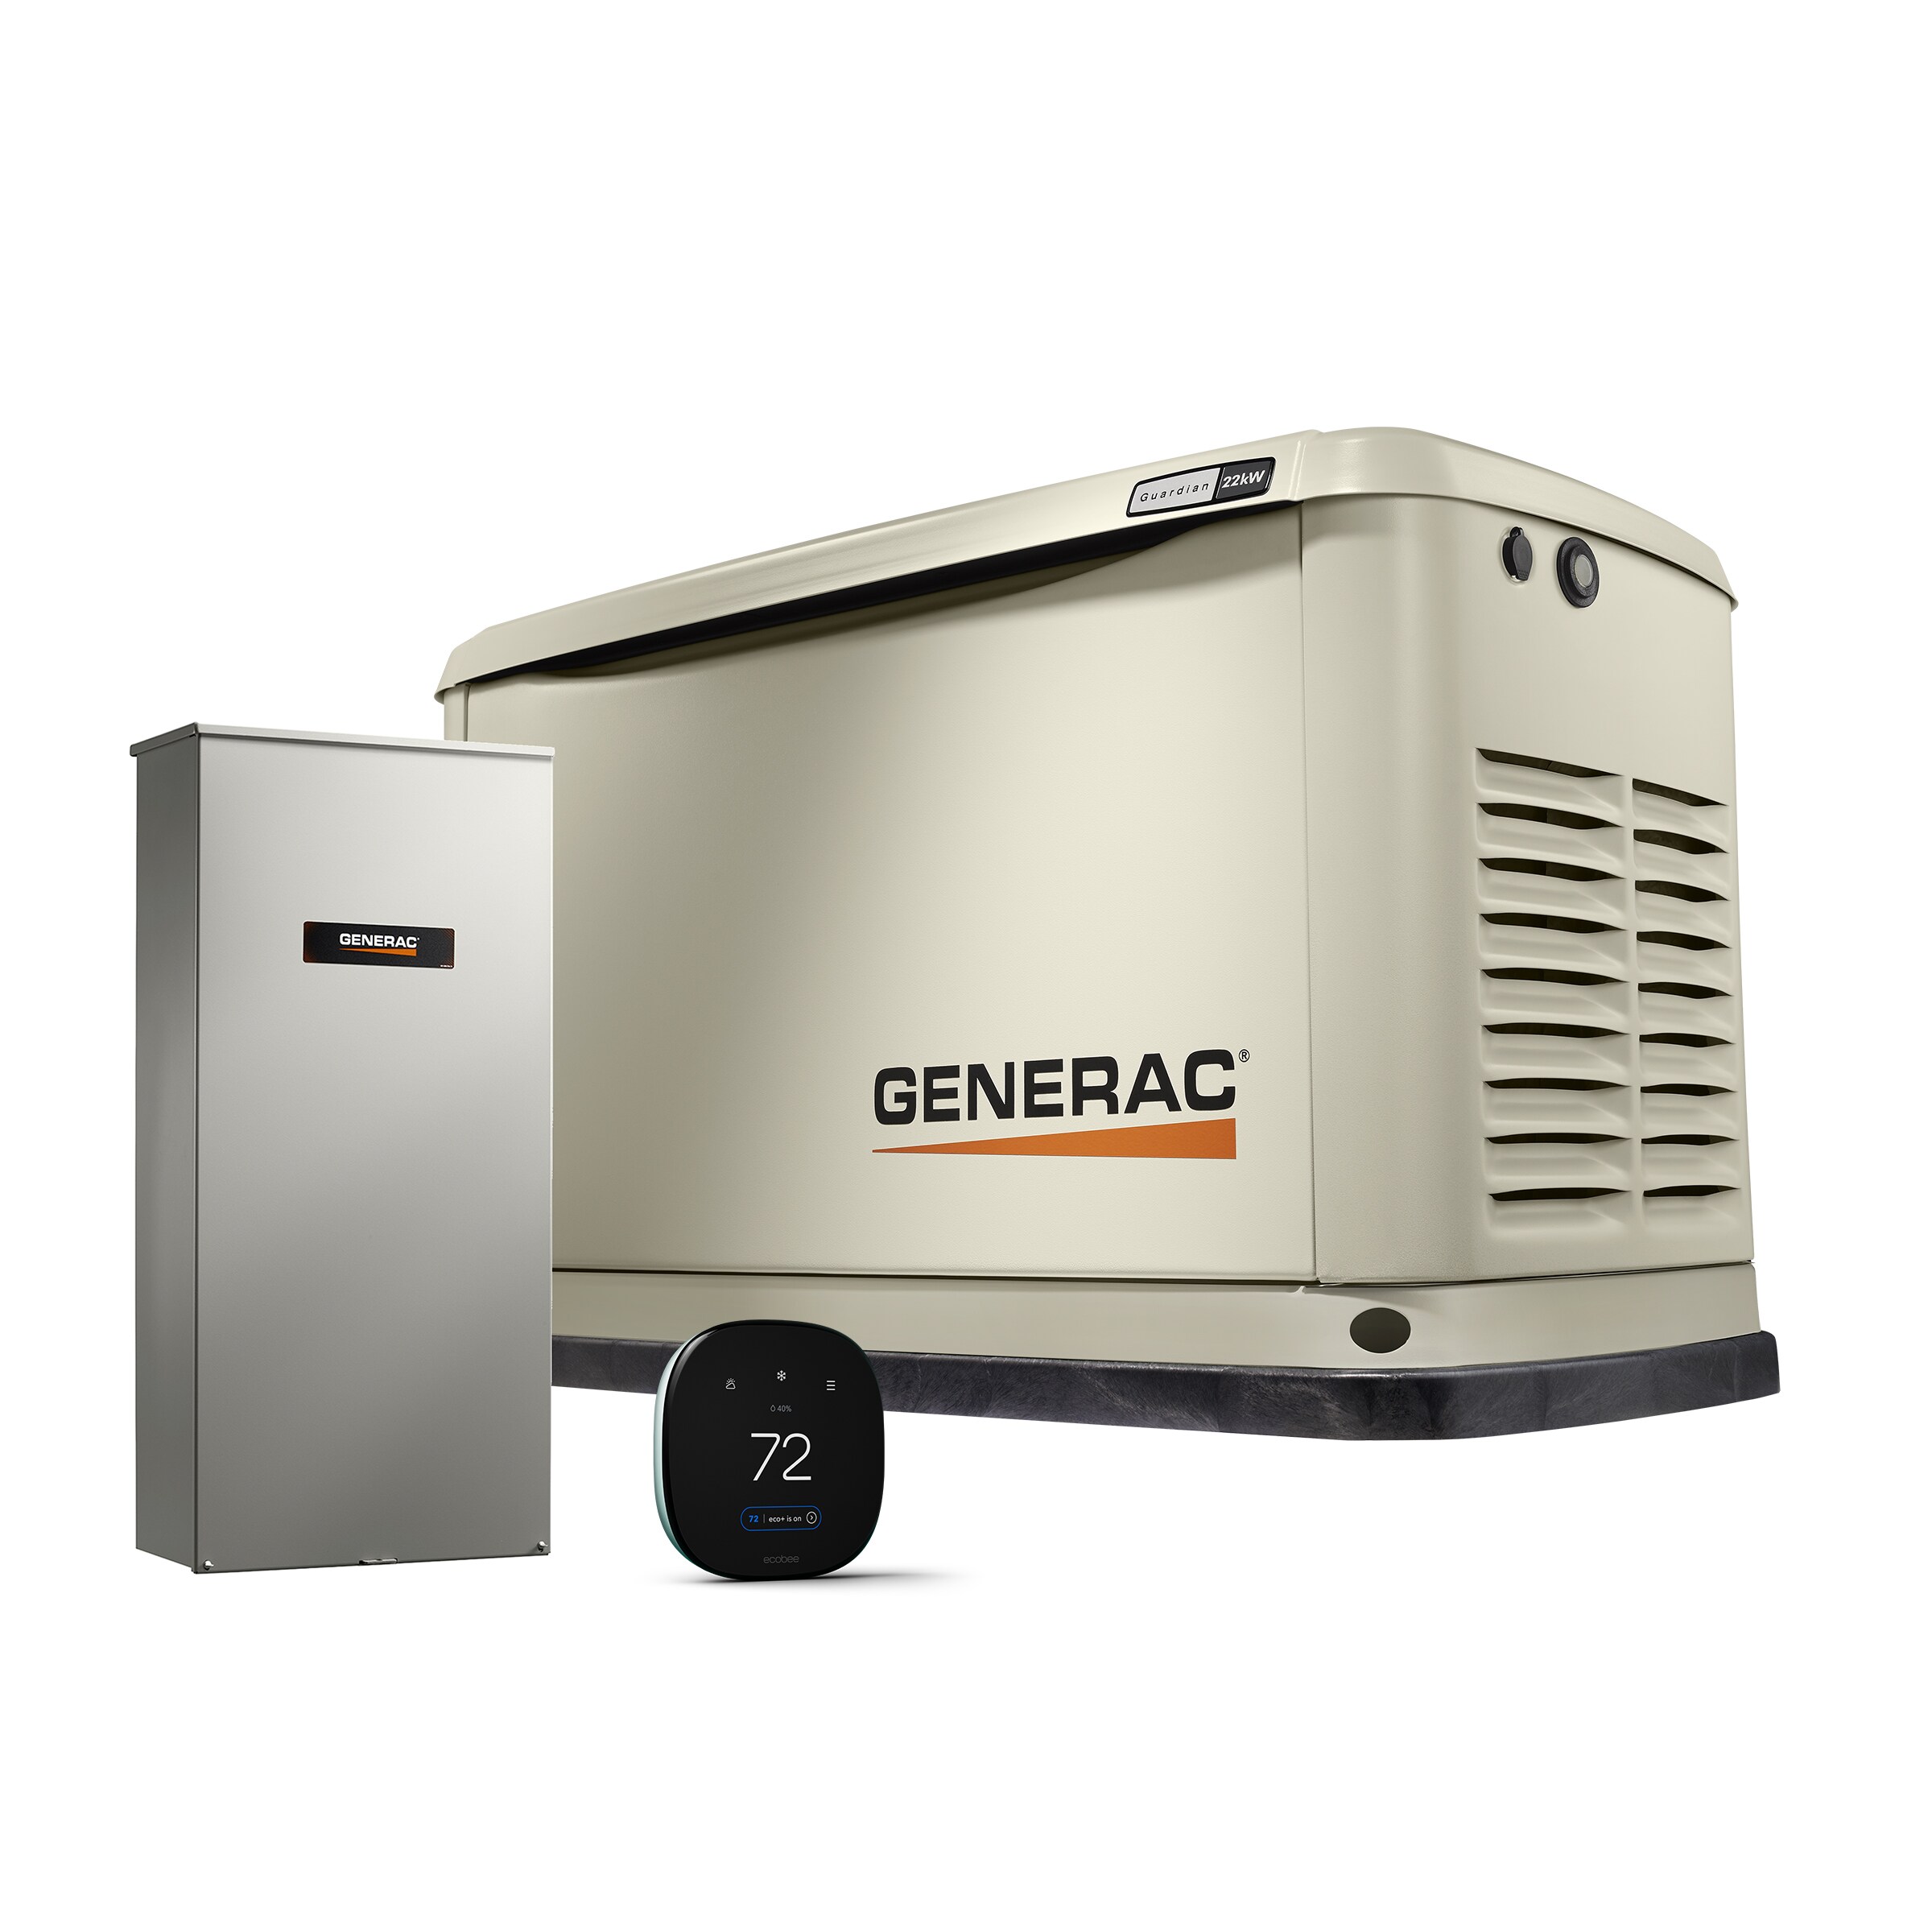 Generac 22kW Home Standby Generator + ecobee Smart Thermostat Enhanced Bundle